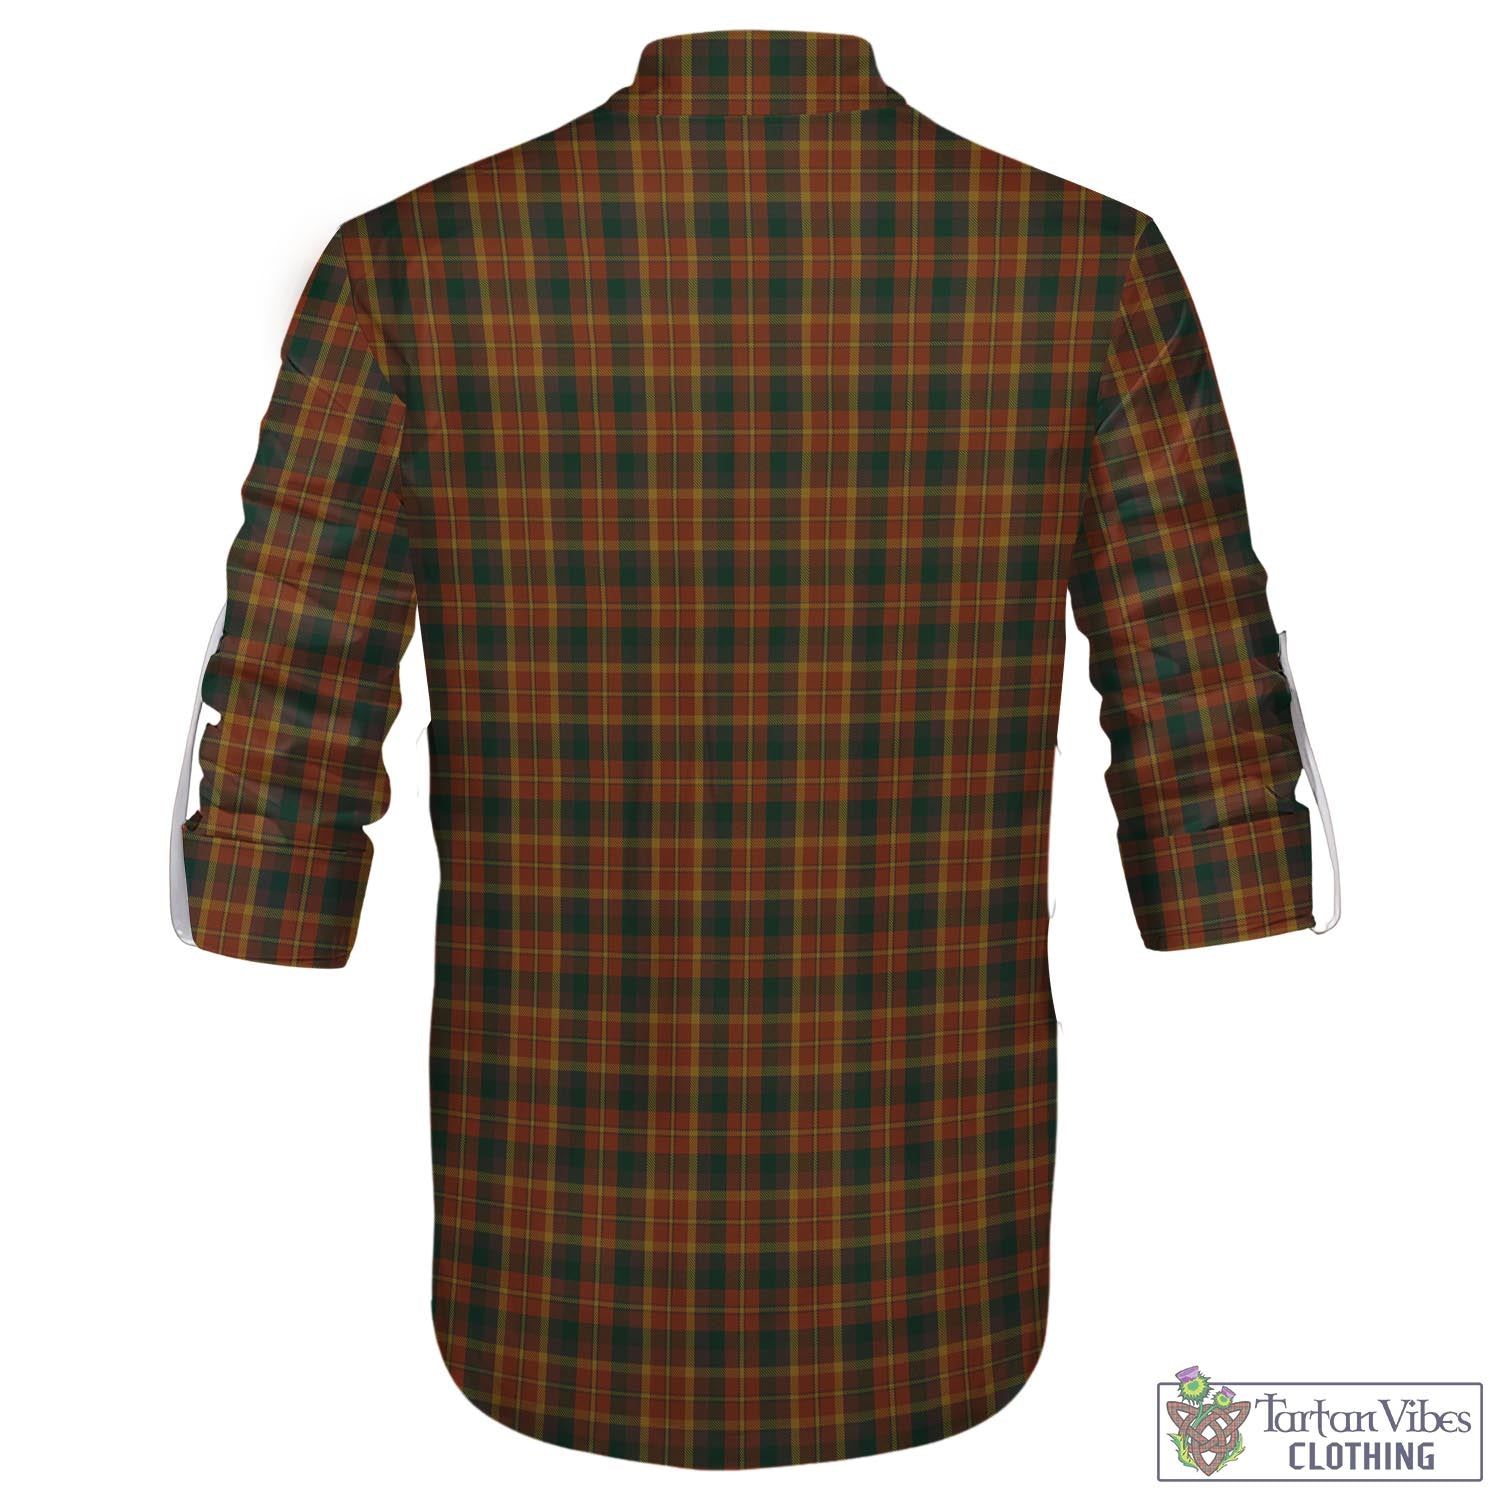 Tartan Vibes Clothing Monaghan County Ireland Tartan Men's Scottish Traditional Jacobite Ghillie Kilt Shirt